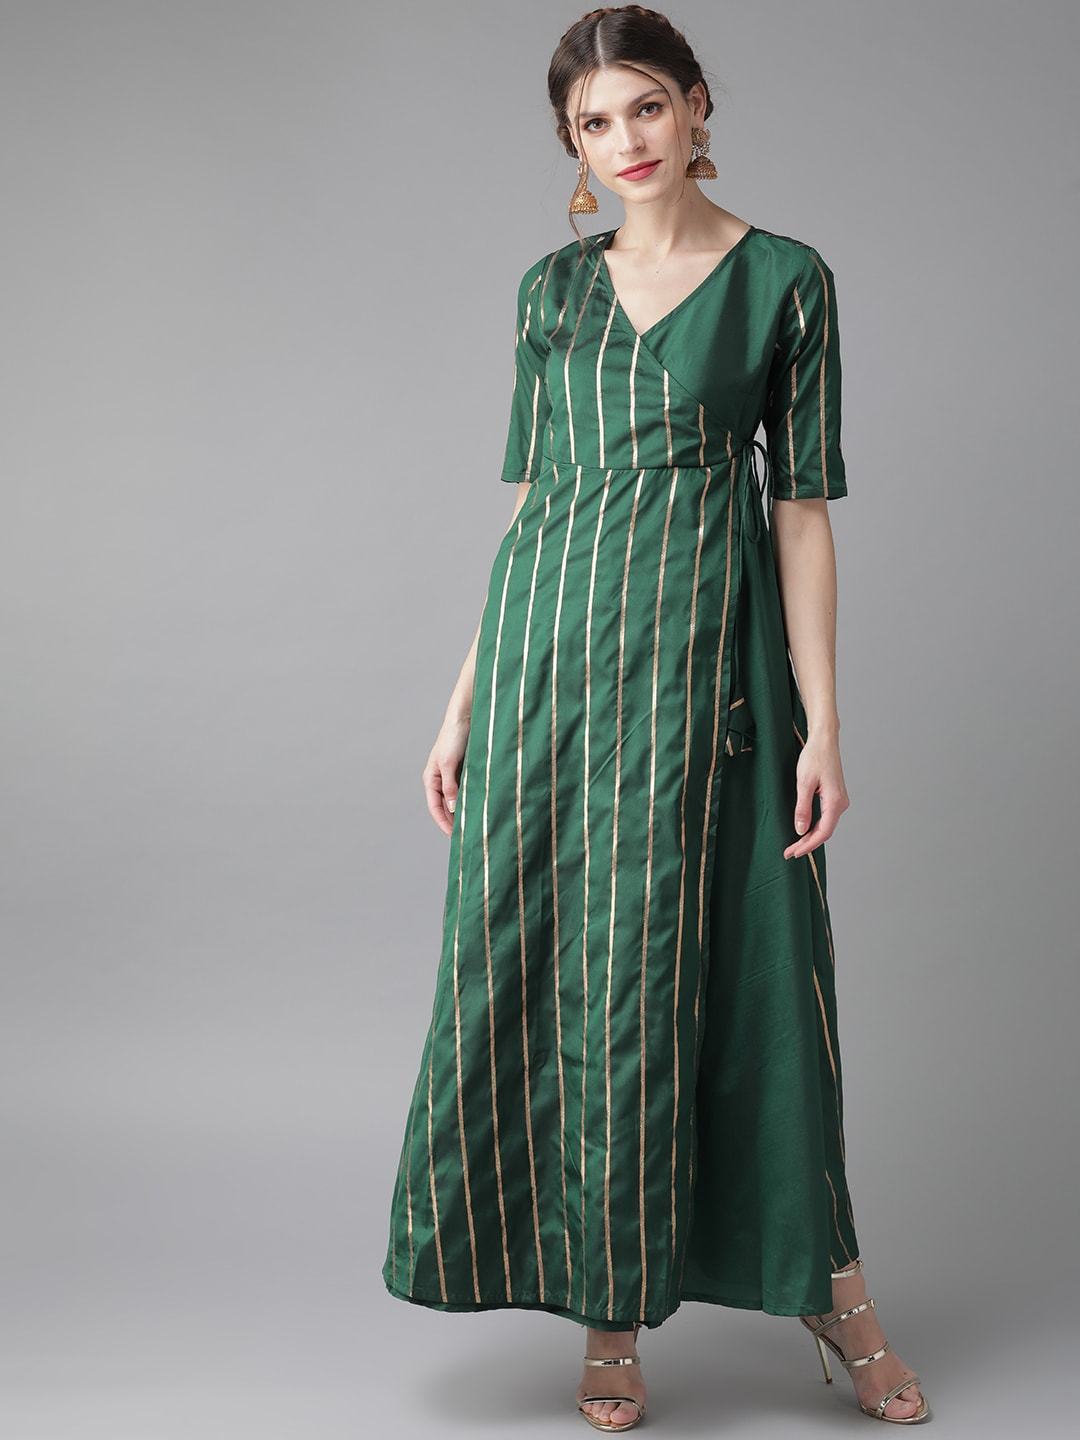 Women's  Green & Golden Striped Wrap Maxi Dress - AKS